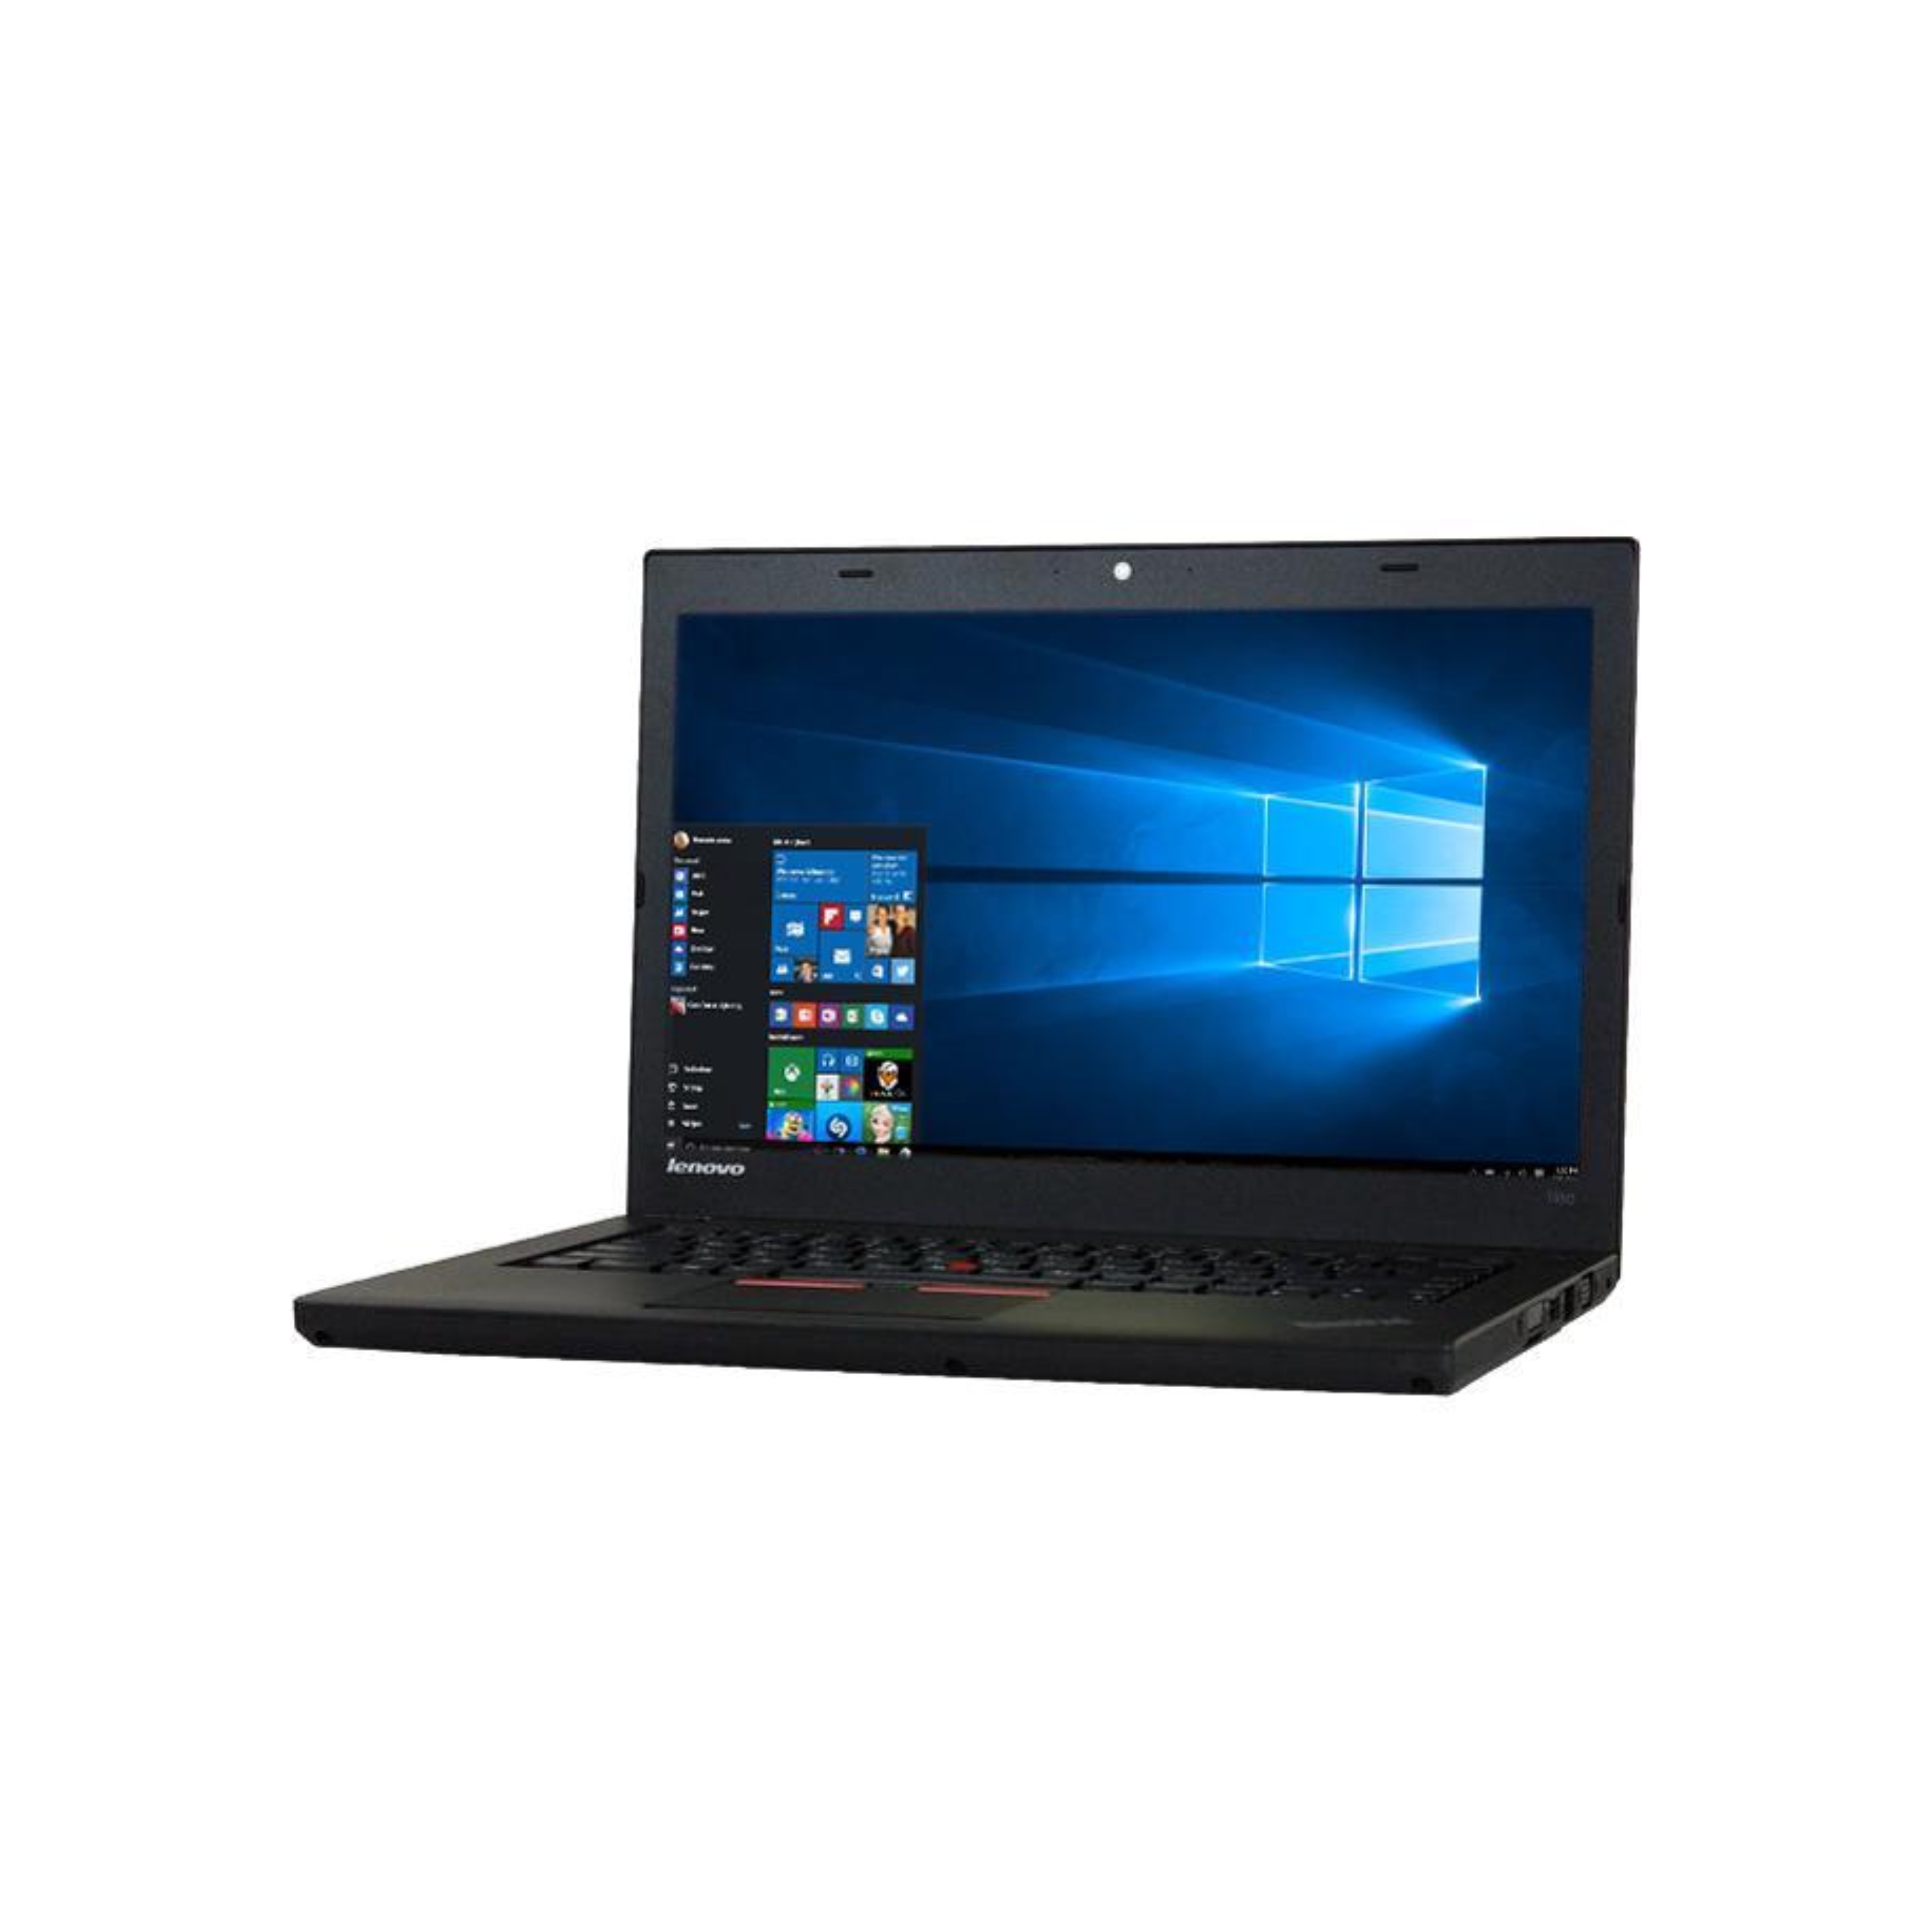  *REFURB* Laptop Lenovo ThinkPad T450 14.0